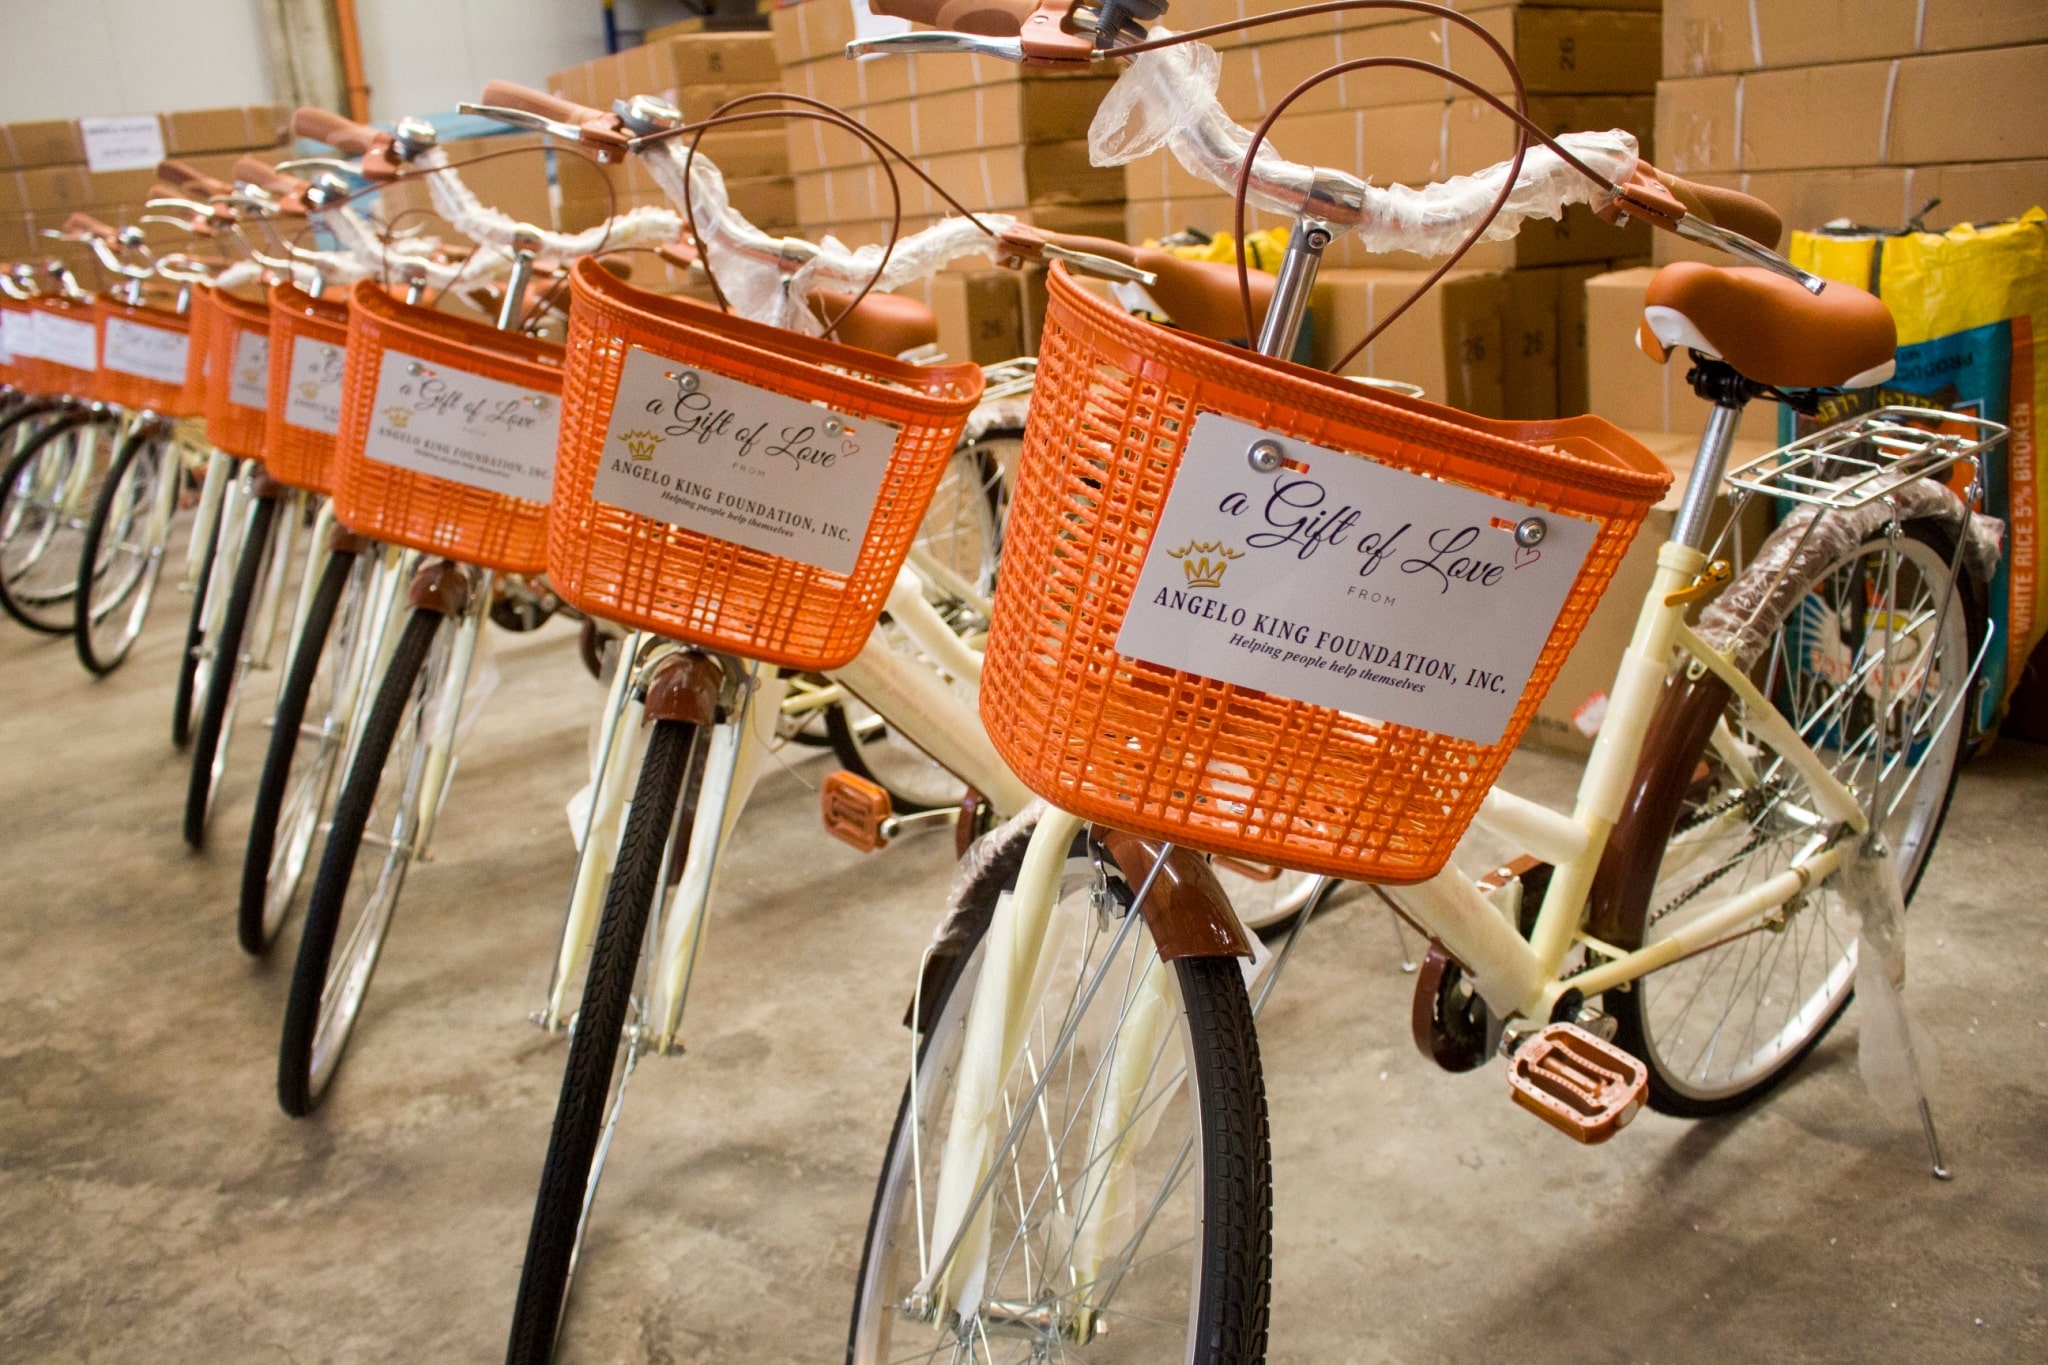 Angelo King Foundation, Inc. (AKFI) donates 50 units of bicycle to Tzu Chi Philippines.【Photo by Matt Serrano】